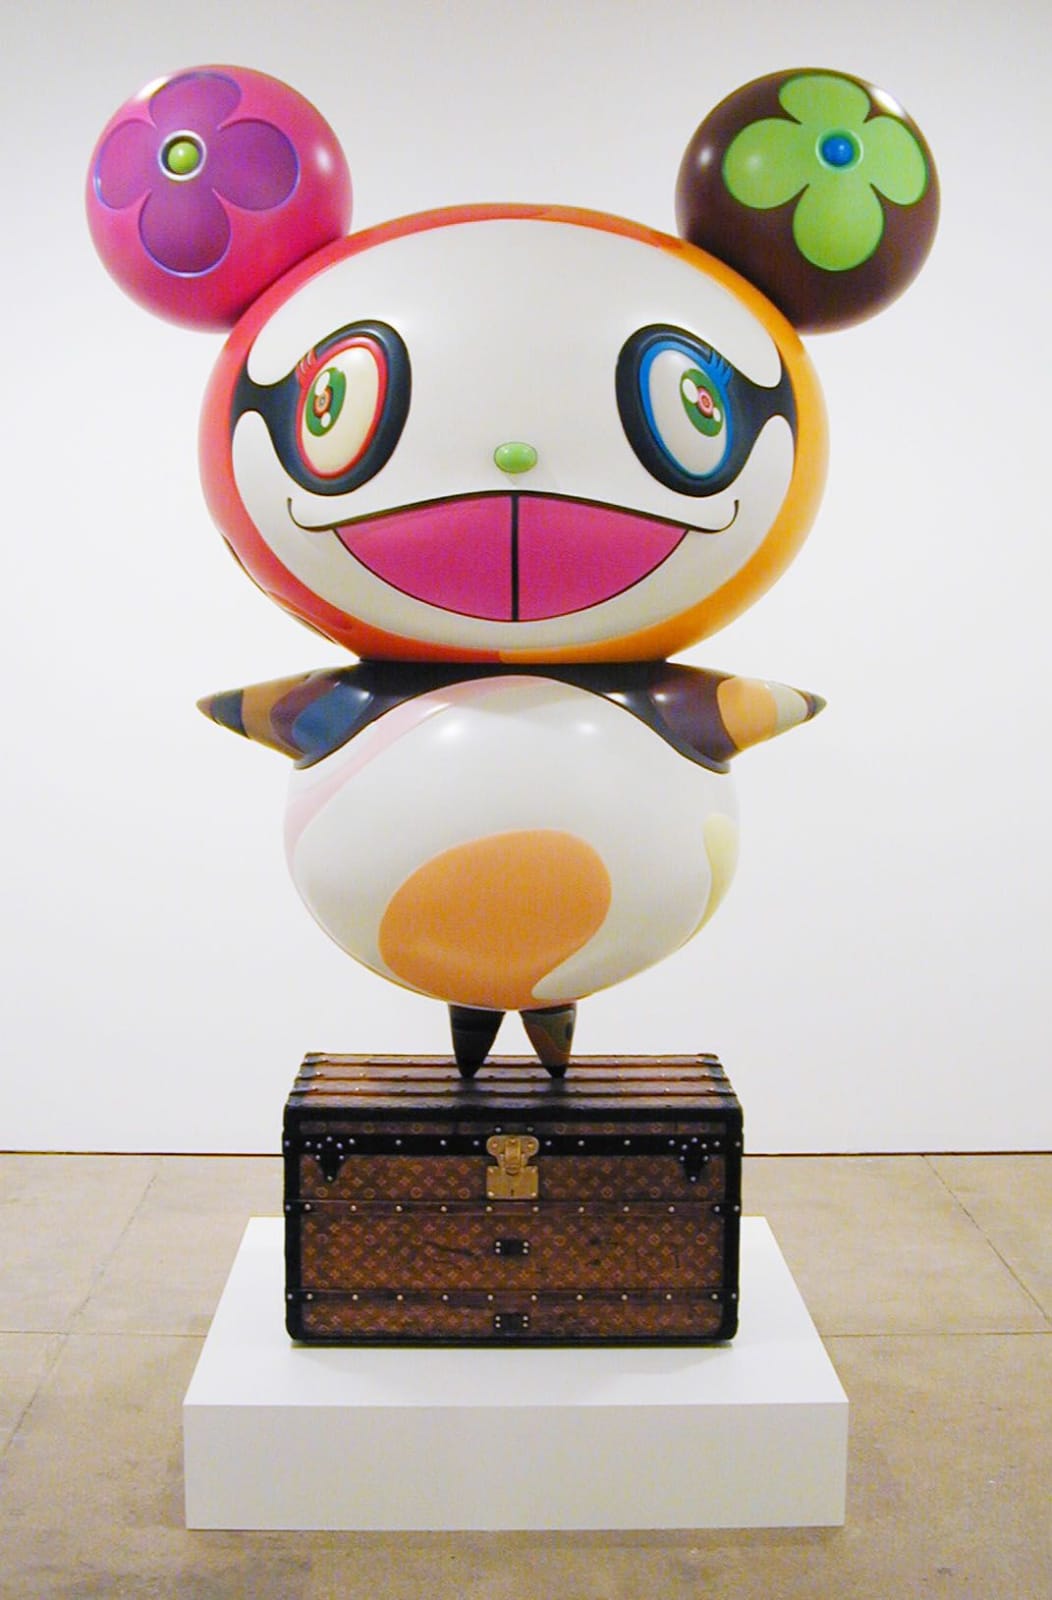 Takashi Murakami (b. 1962). Detail from Superflat Monogram: Panda